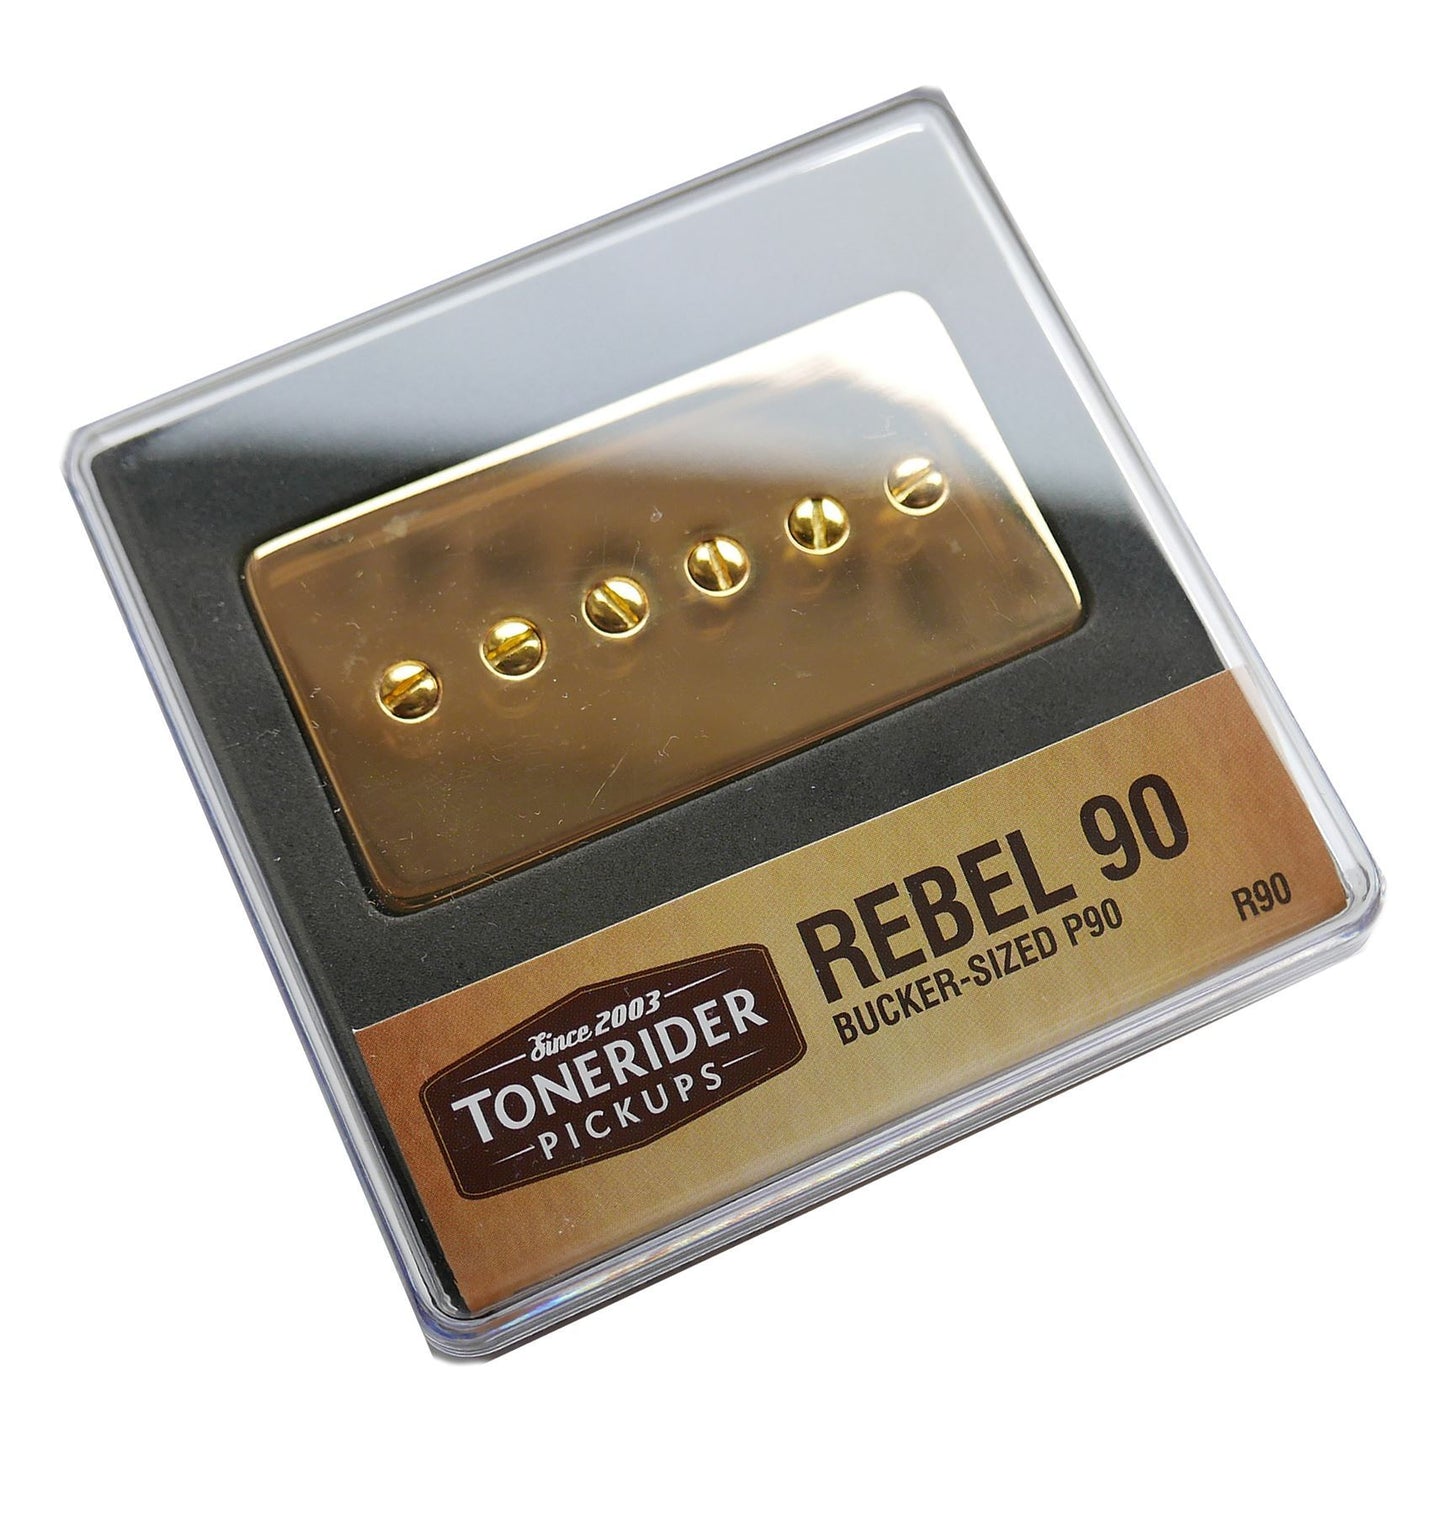 Tonerider Rebel 90 Humbucker sized P90 Guitar Pickup - Gold